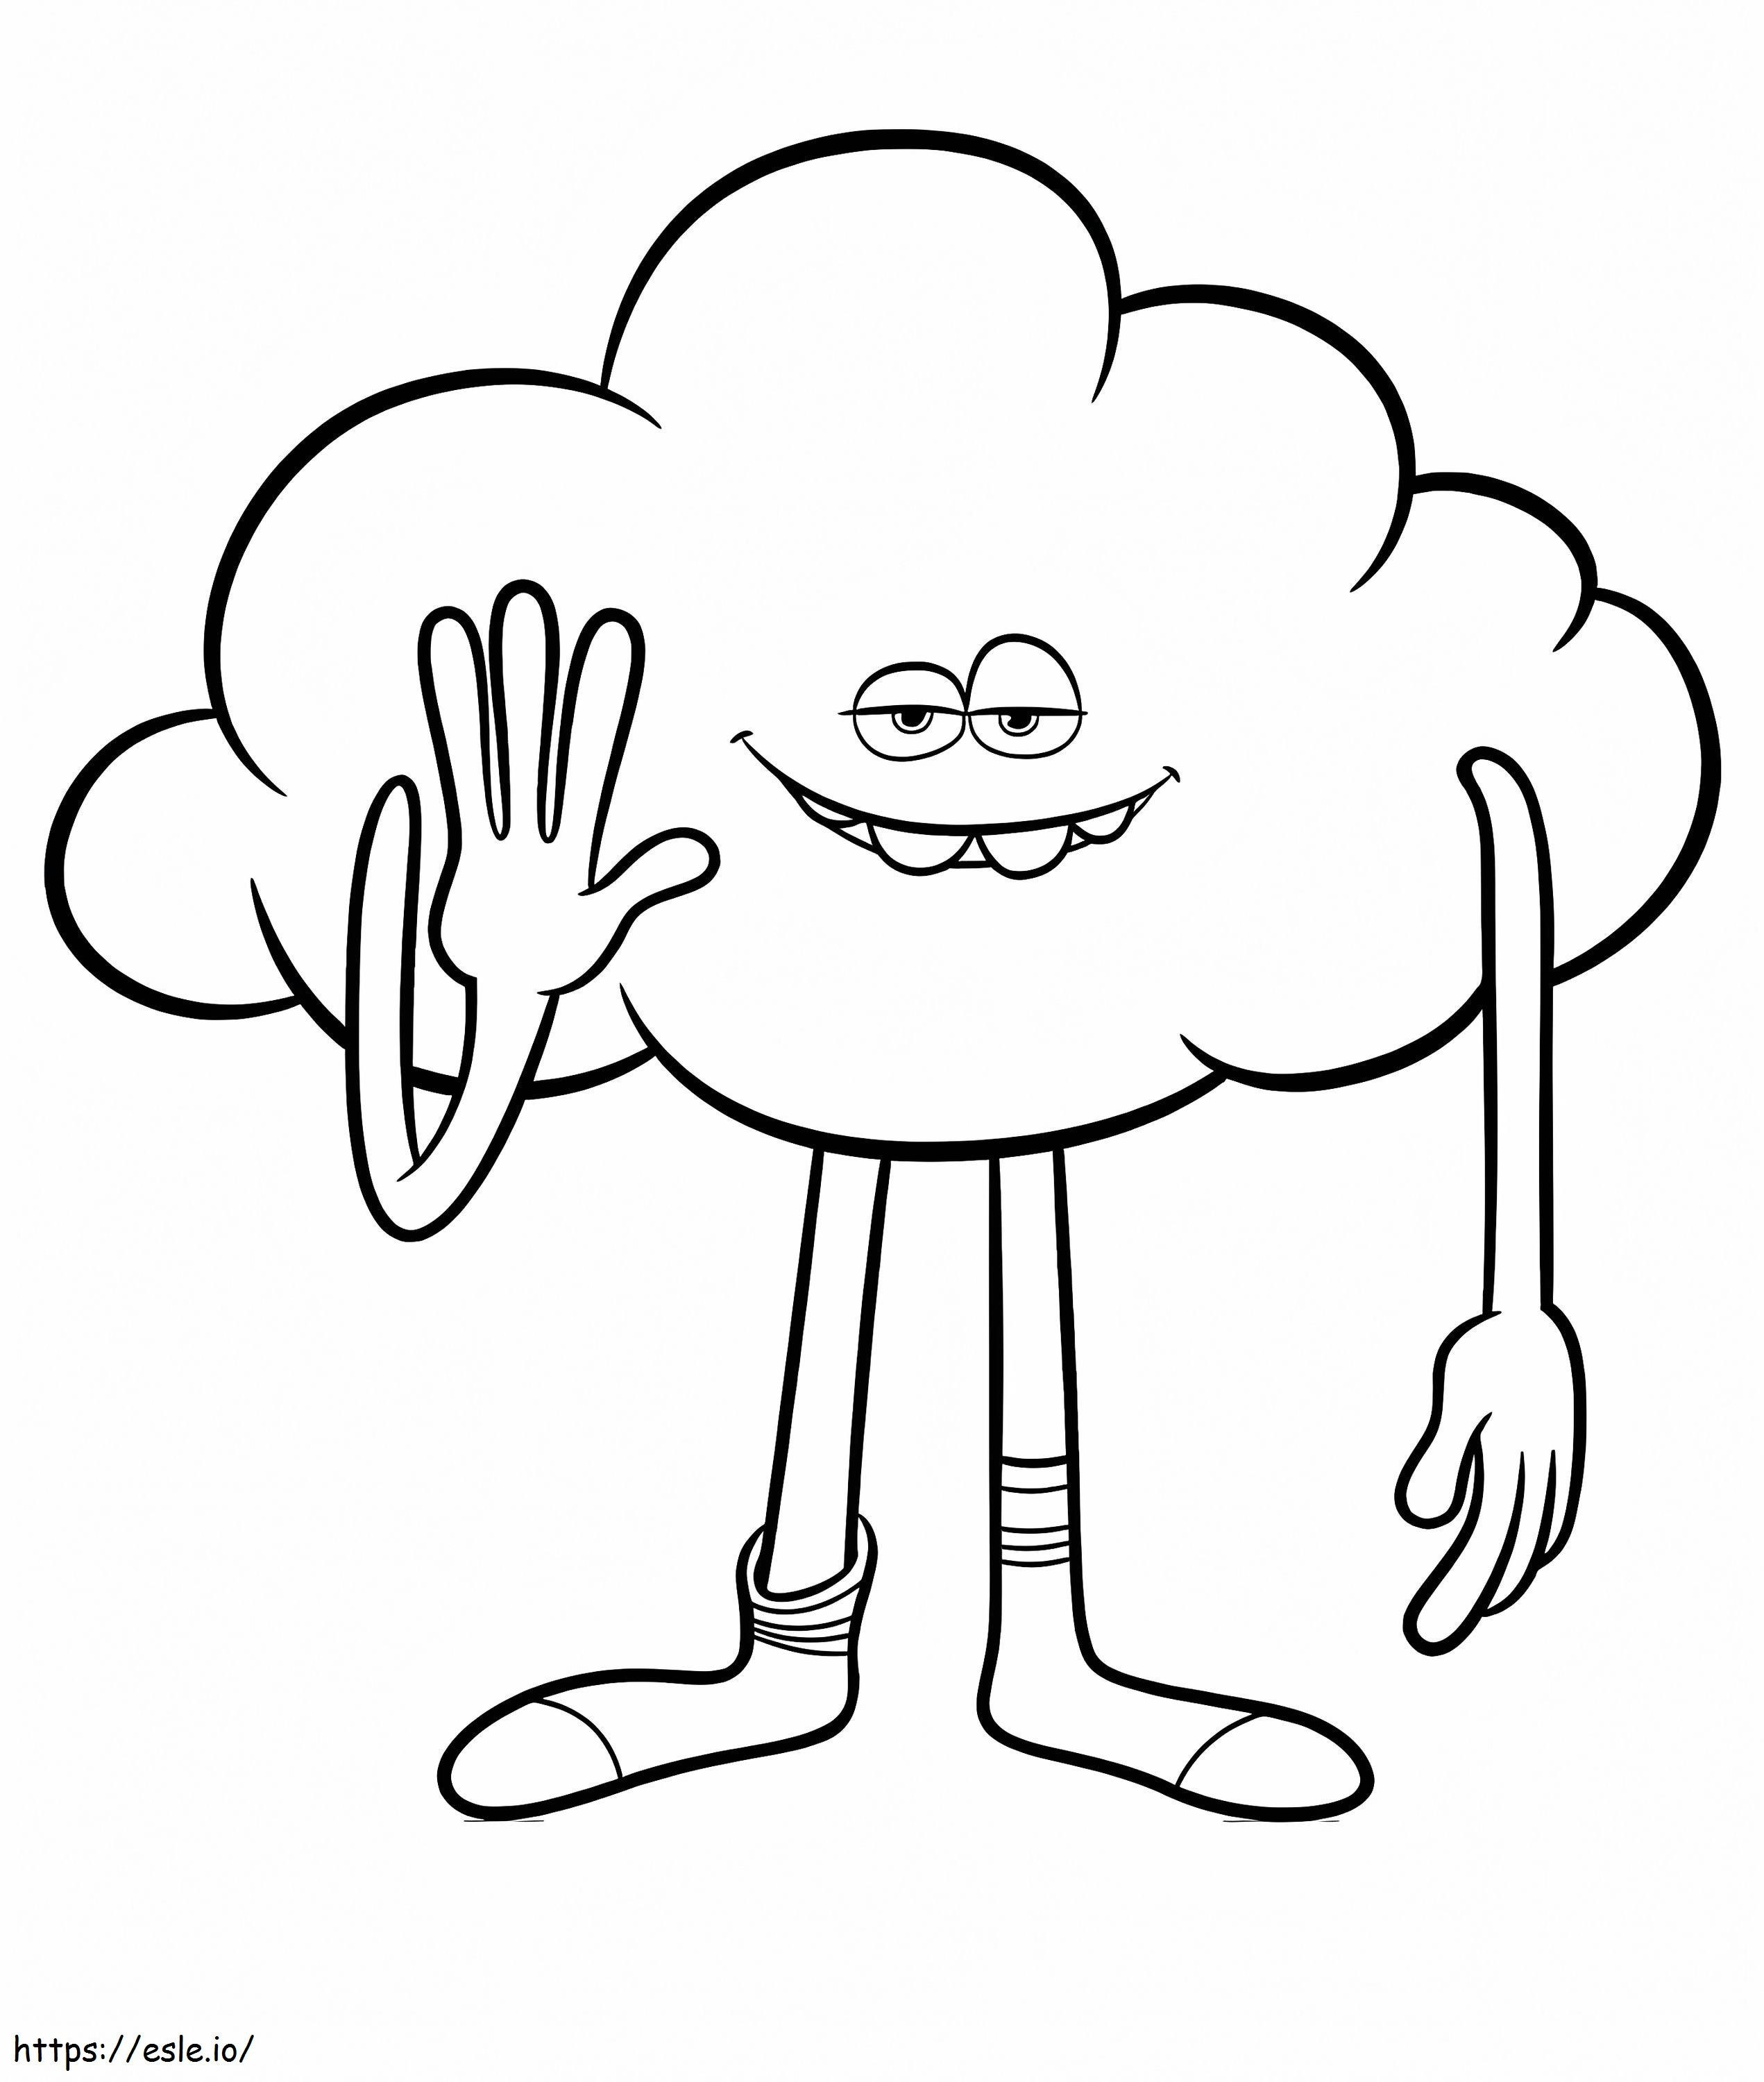 Coloriage garçon nuage à imprimer dessin